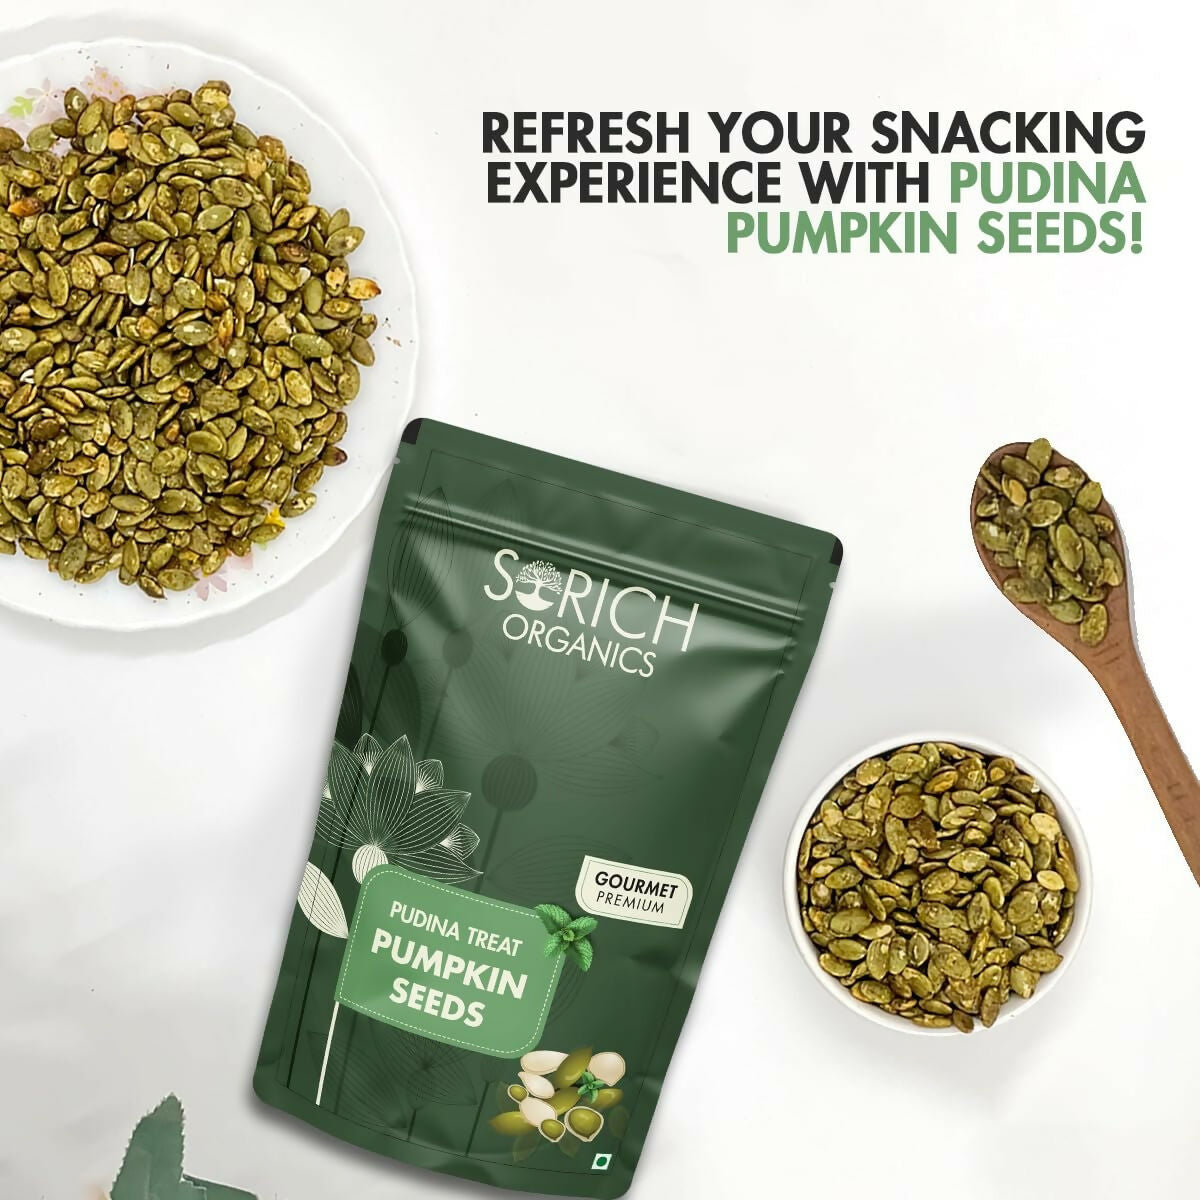 Sorich Organics Pudina Treat Pumpkin Seeds